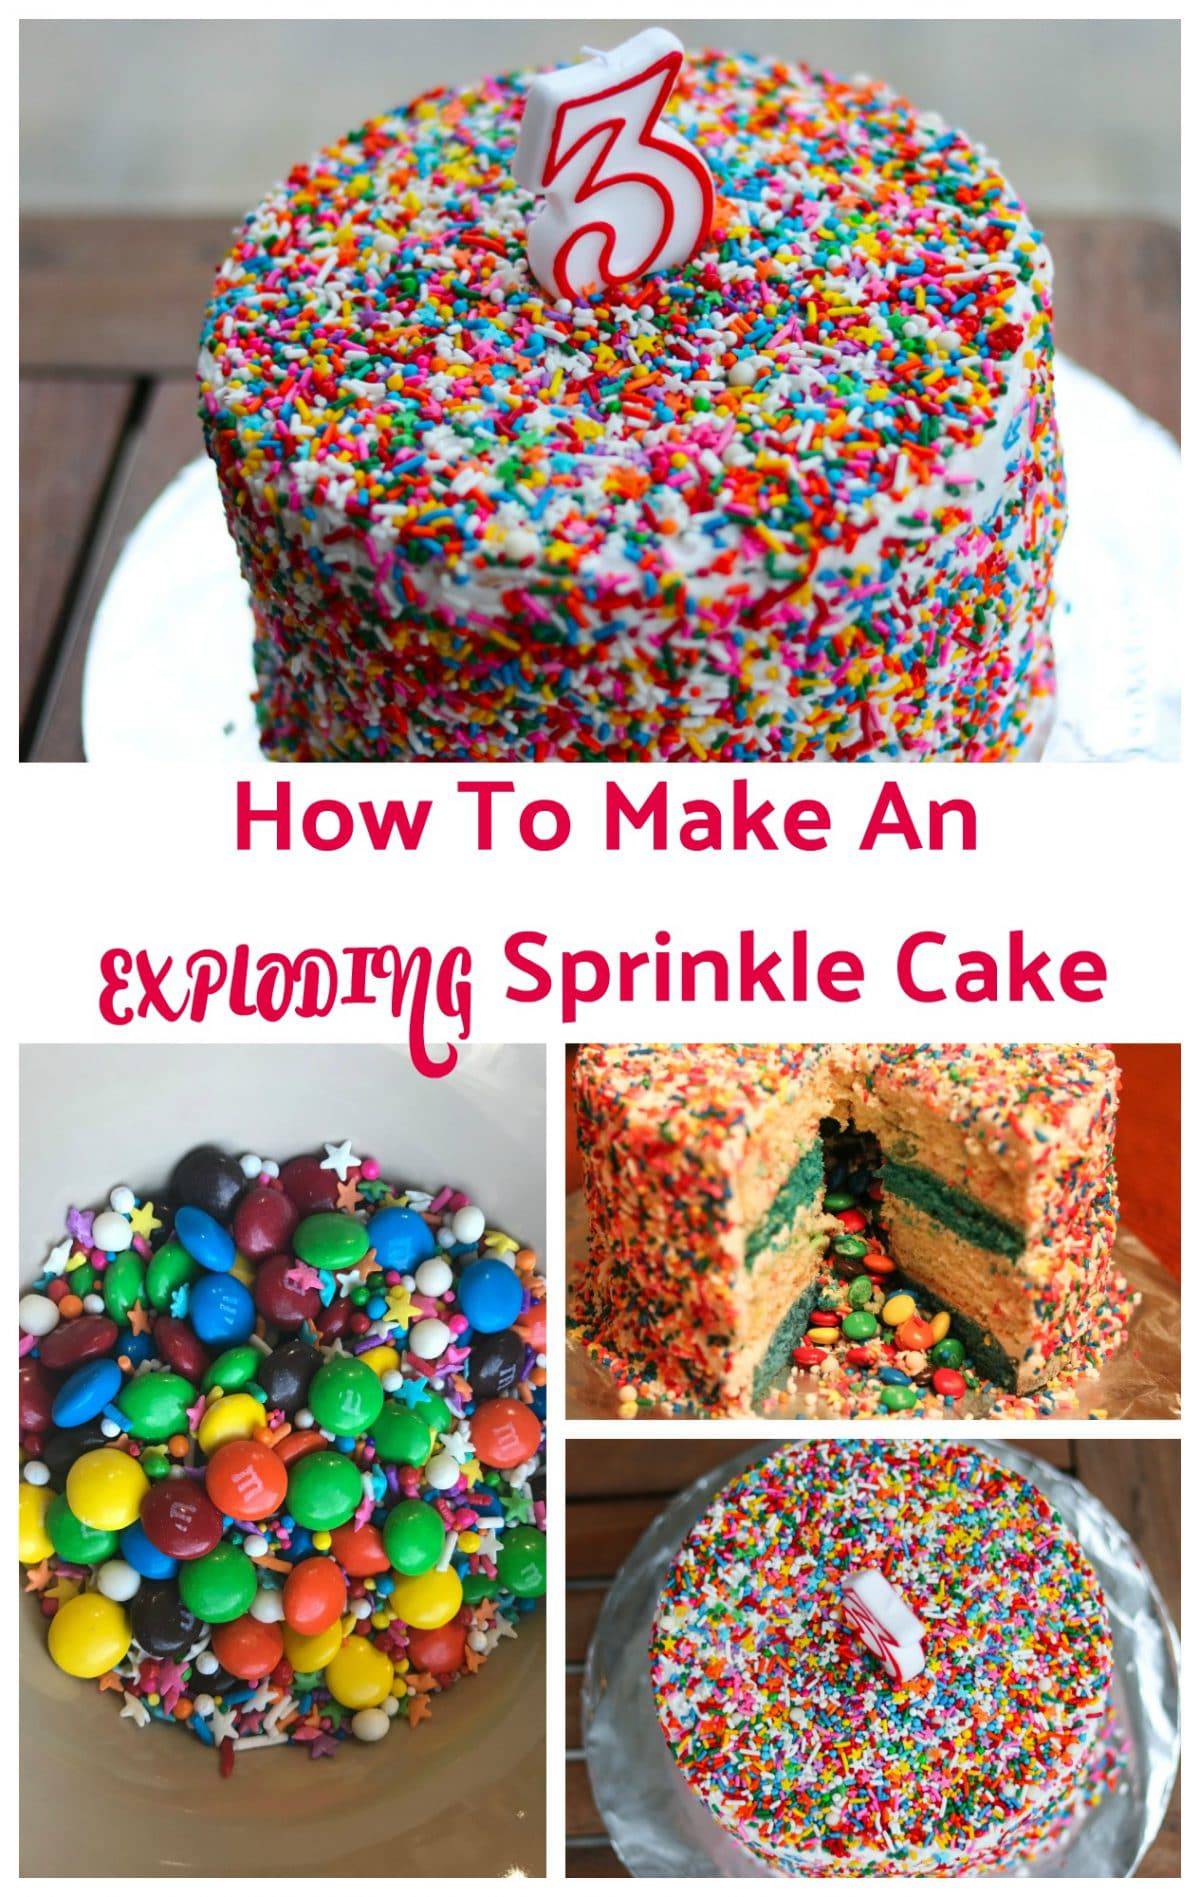 How To Make An Exploding Sprinkle Cake || Erin Brighton | birthday cakes | baking | cake decorating | kid birthday cakes | gluten free baking